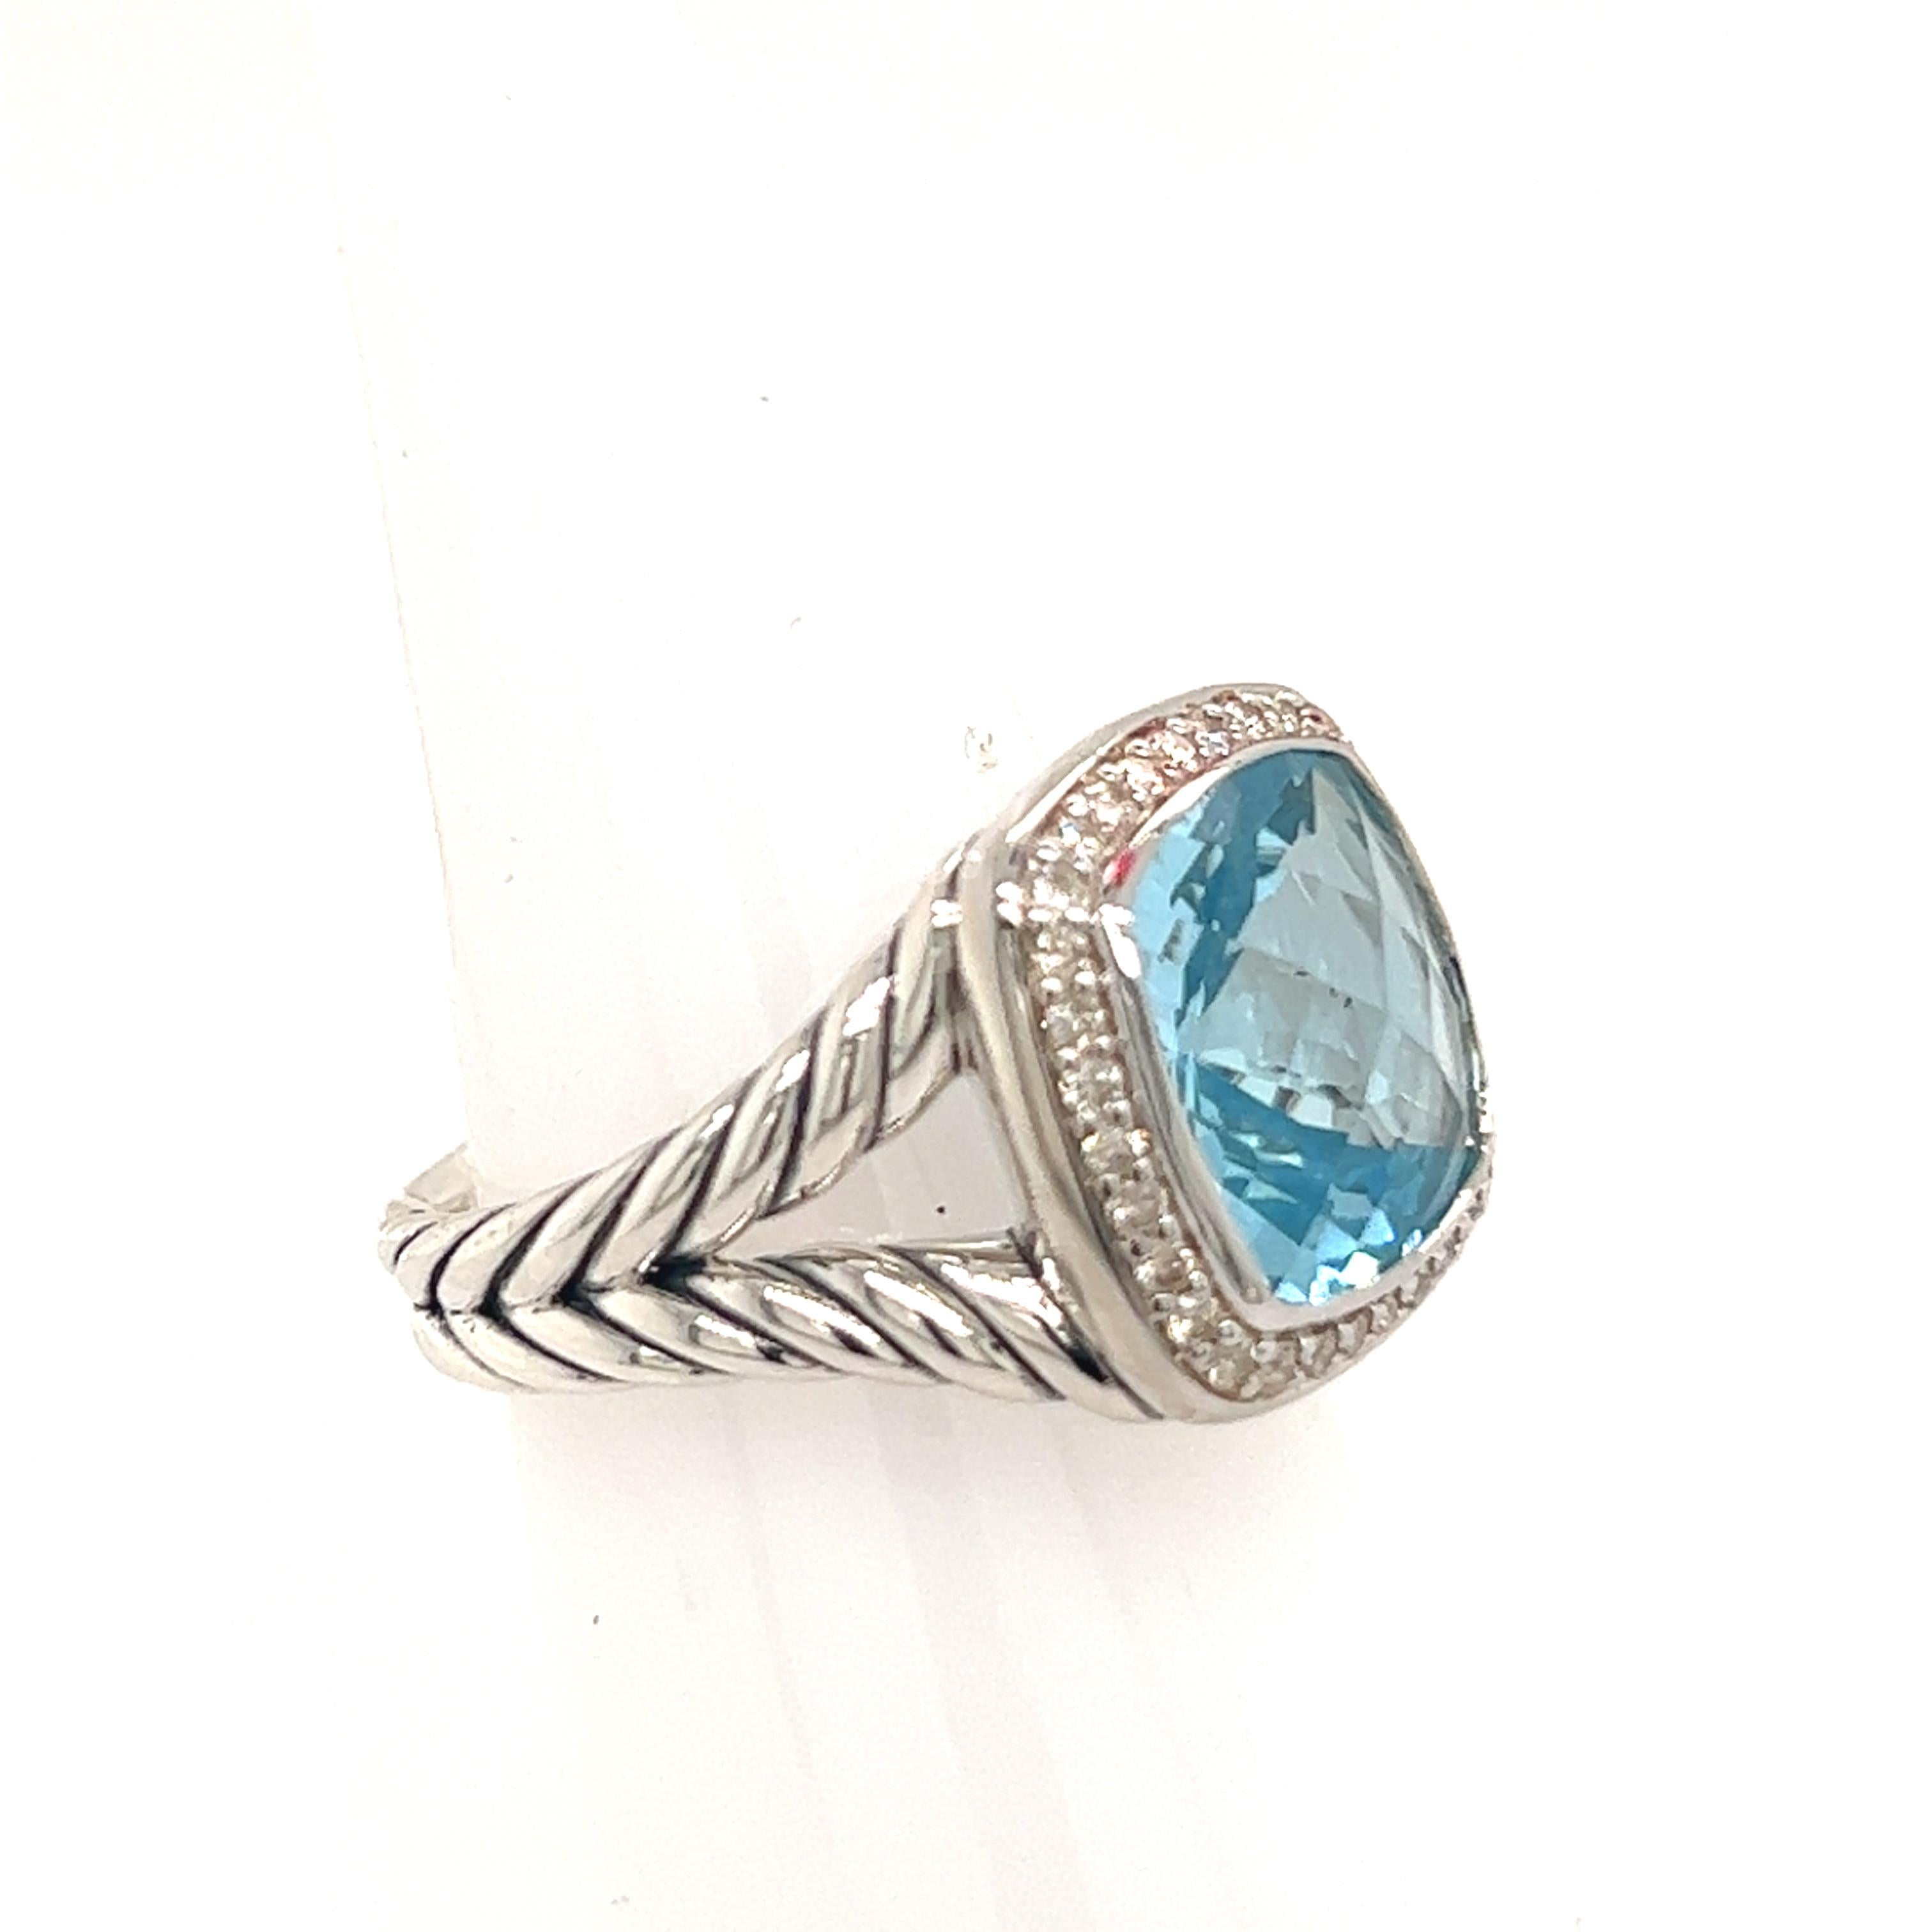 Brilliant Cut David Yurman Estate Blue Topaz Diamond Albion Ring Silver 0.22 TCW